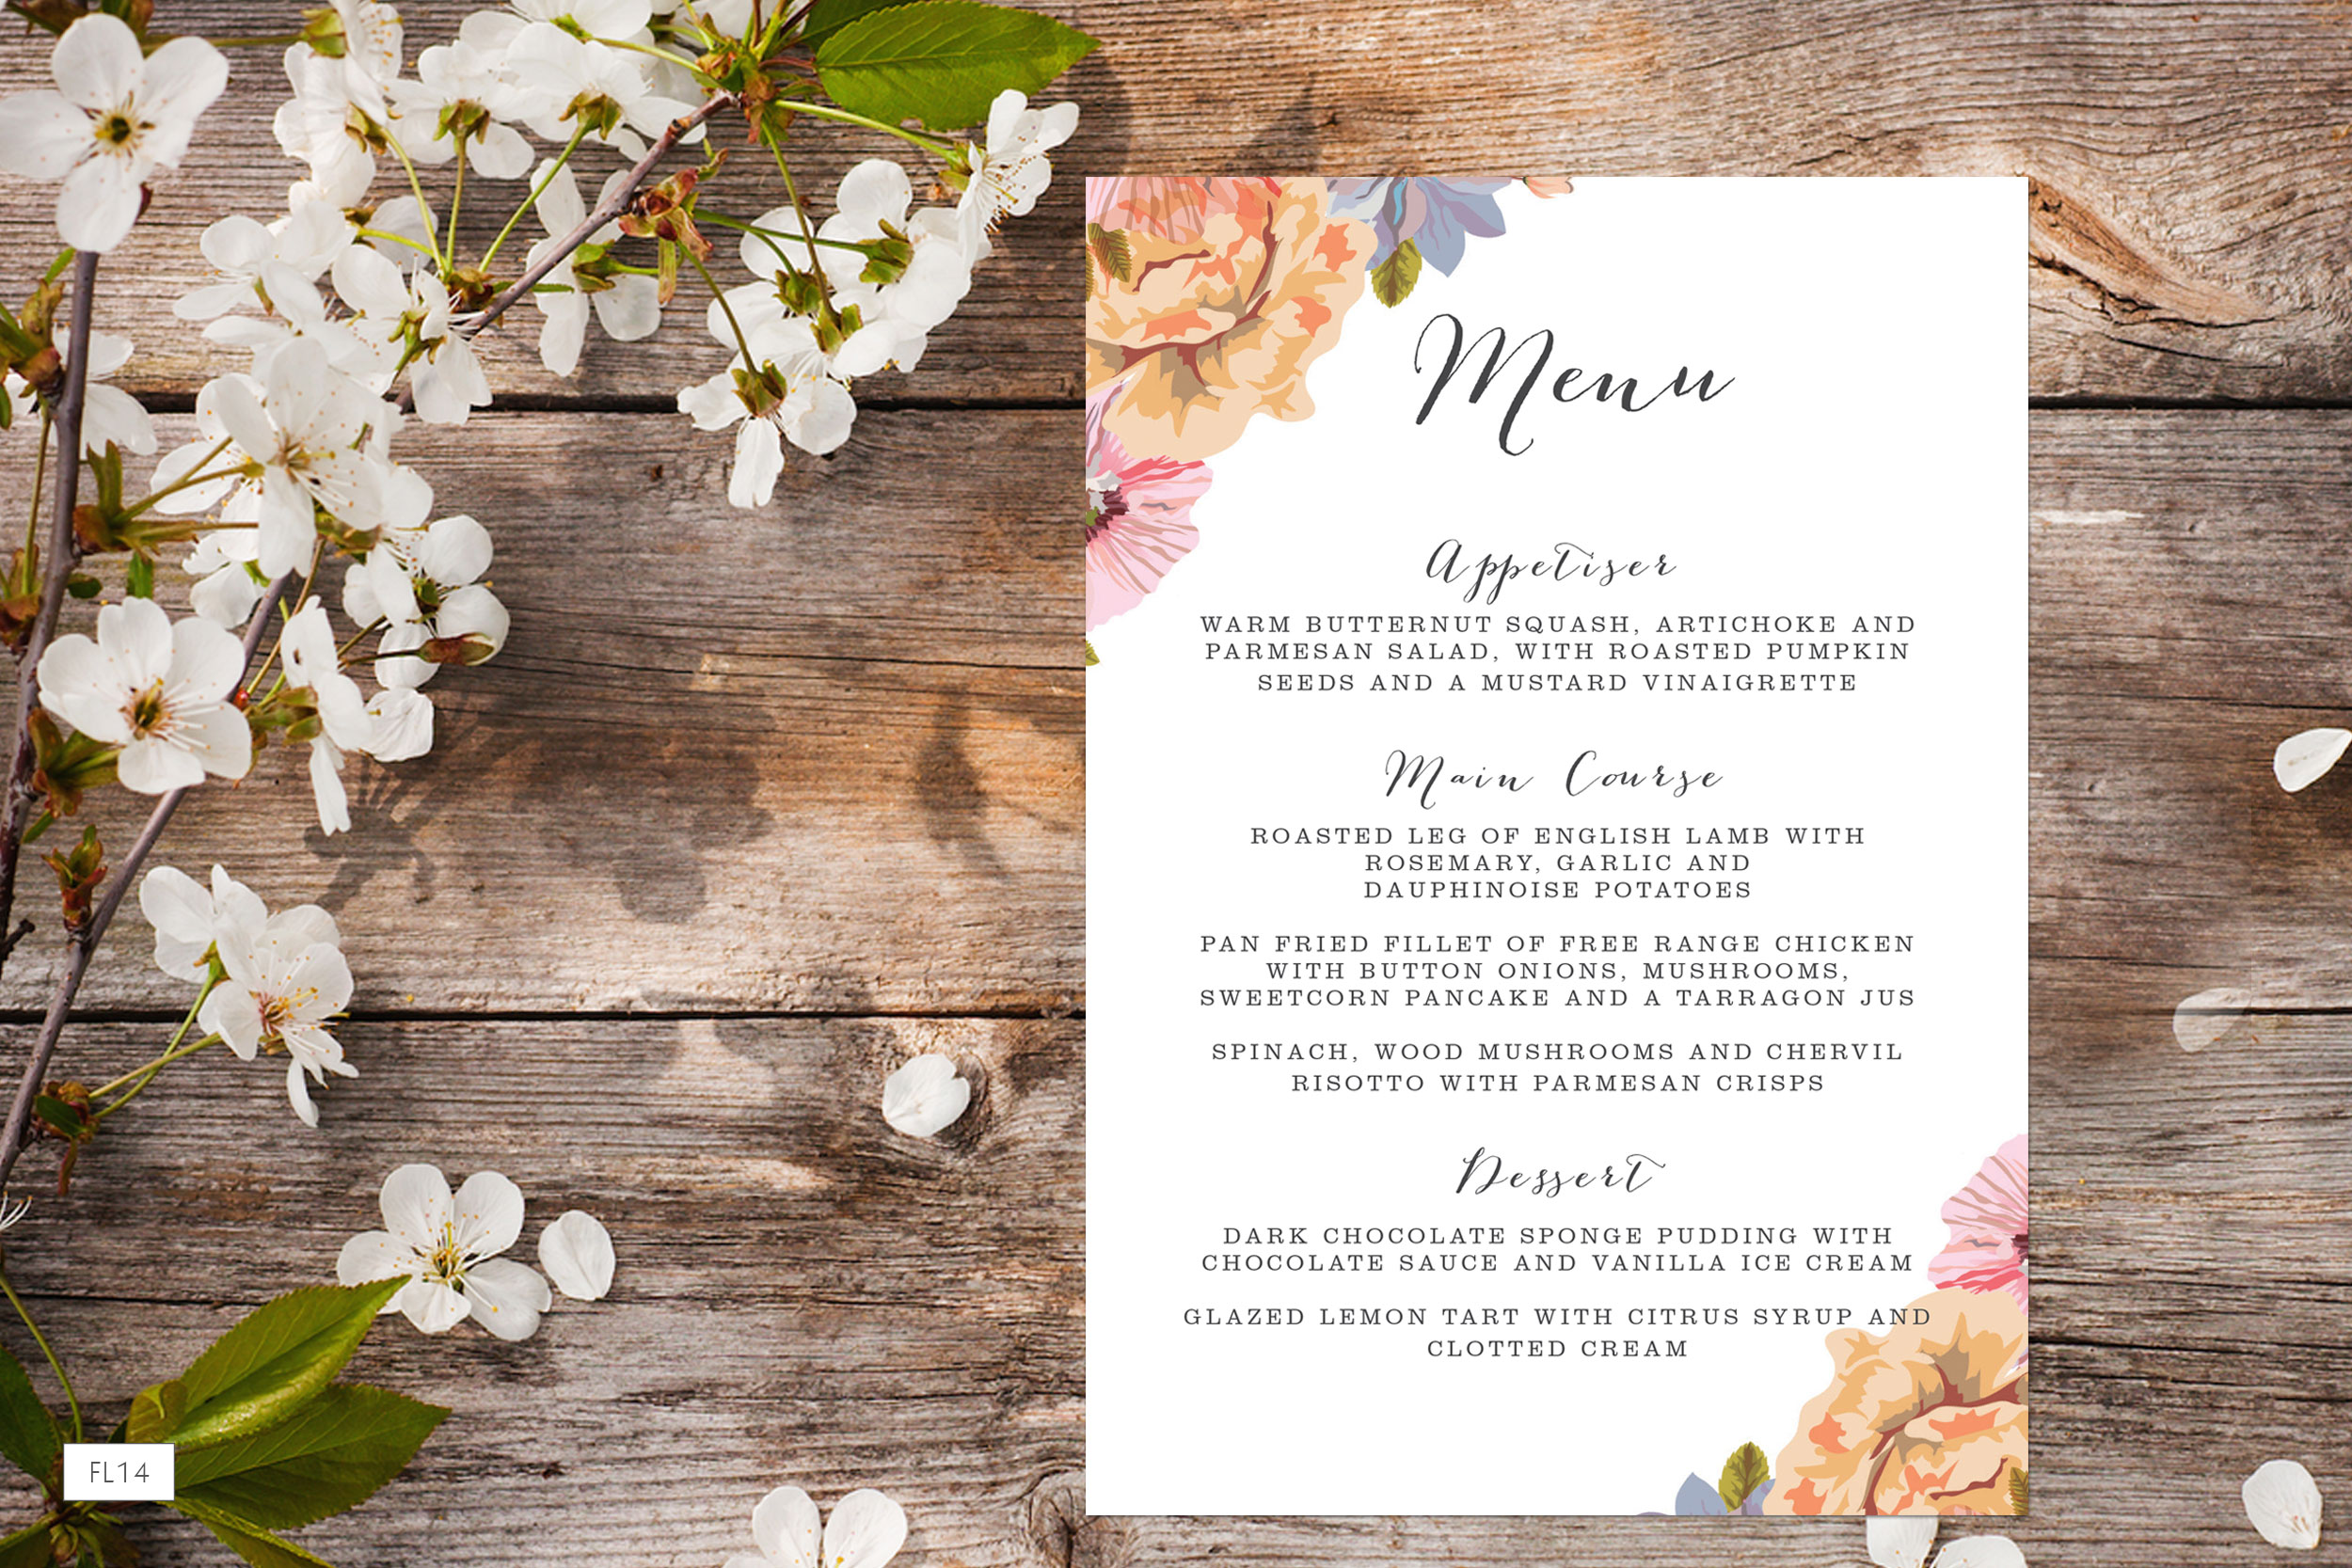 florals-wedding-invitation-menu.jpg